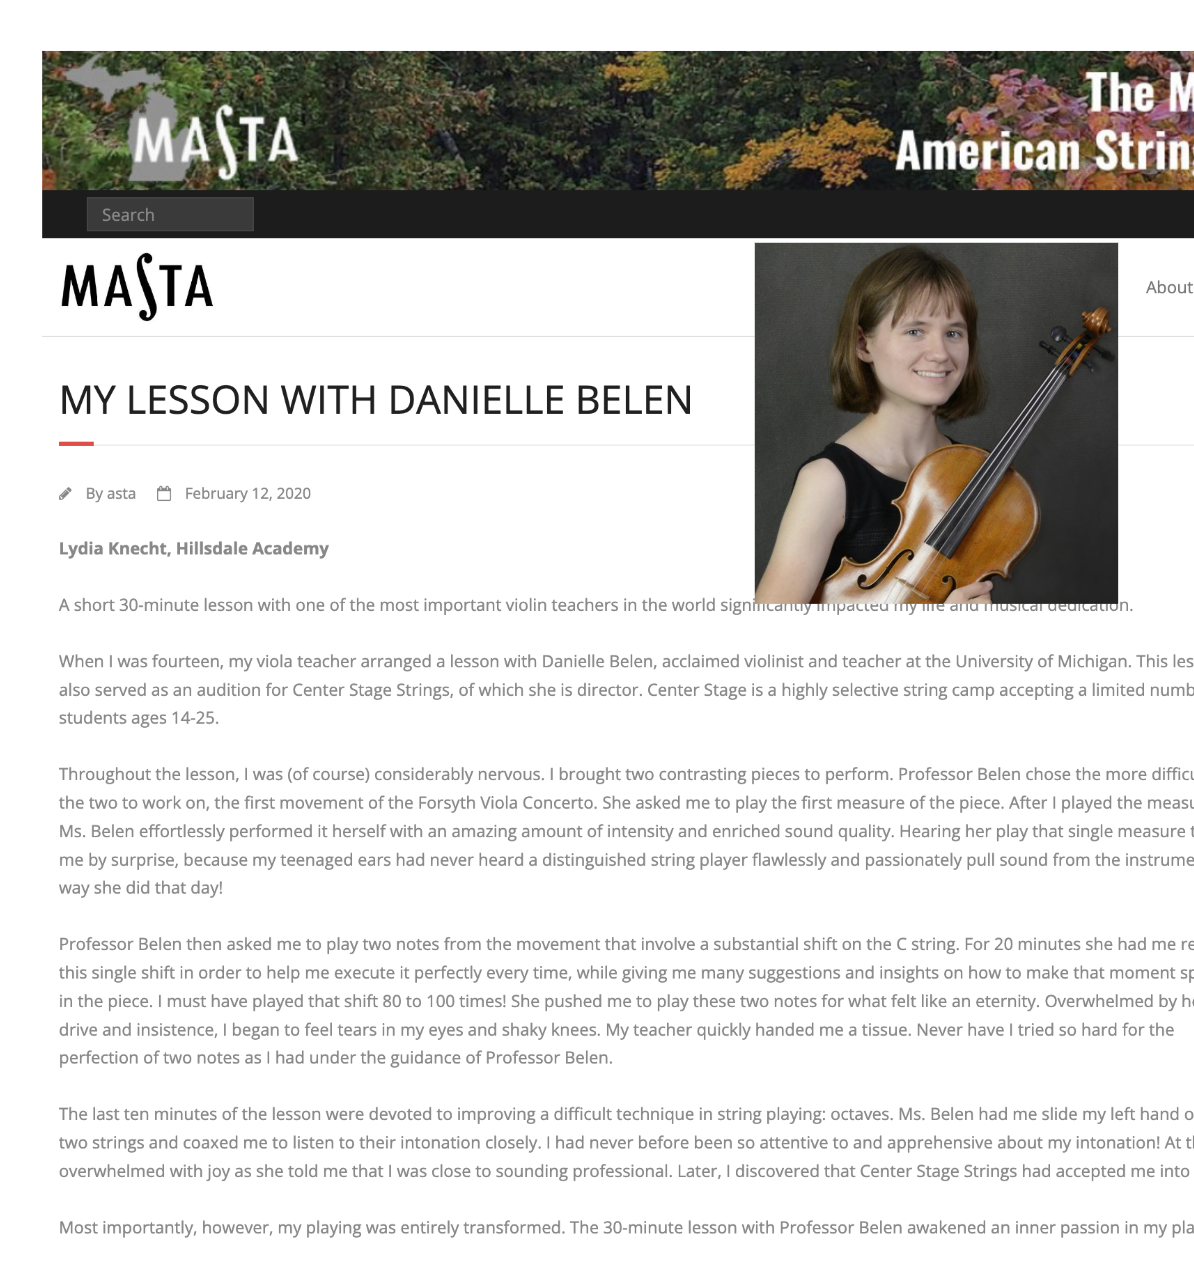 MASTA Article by violist Lydia Knecht